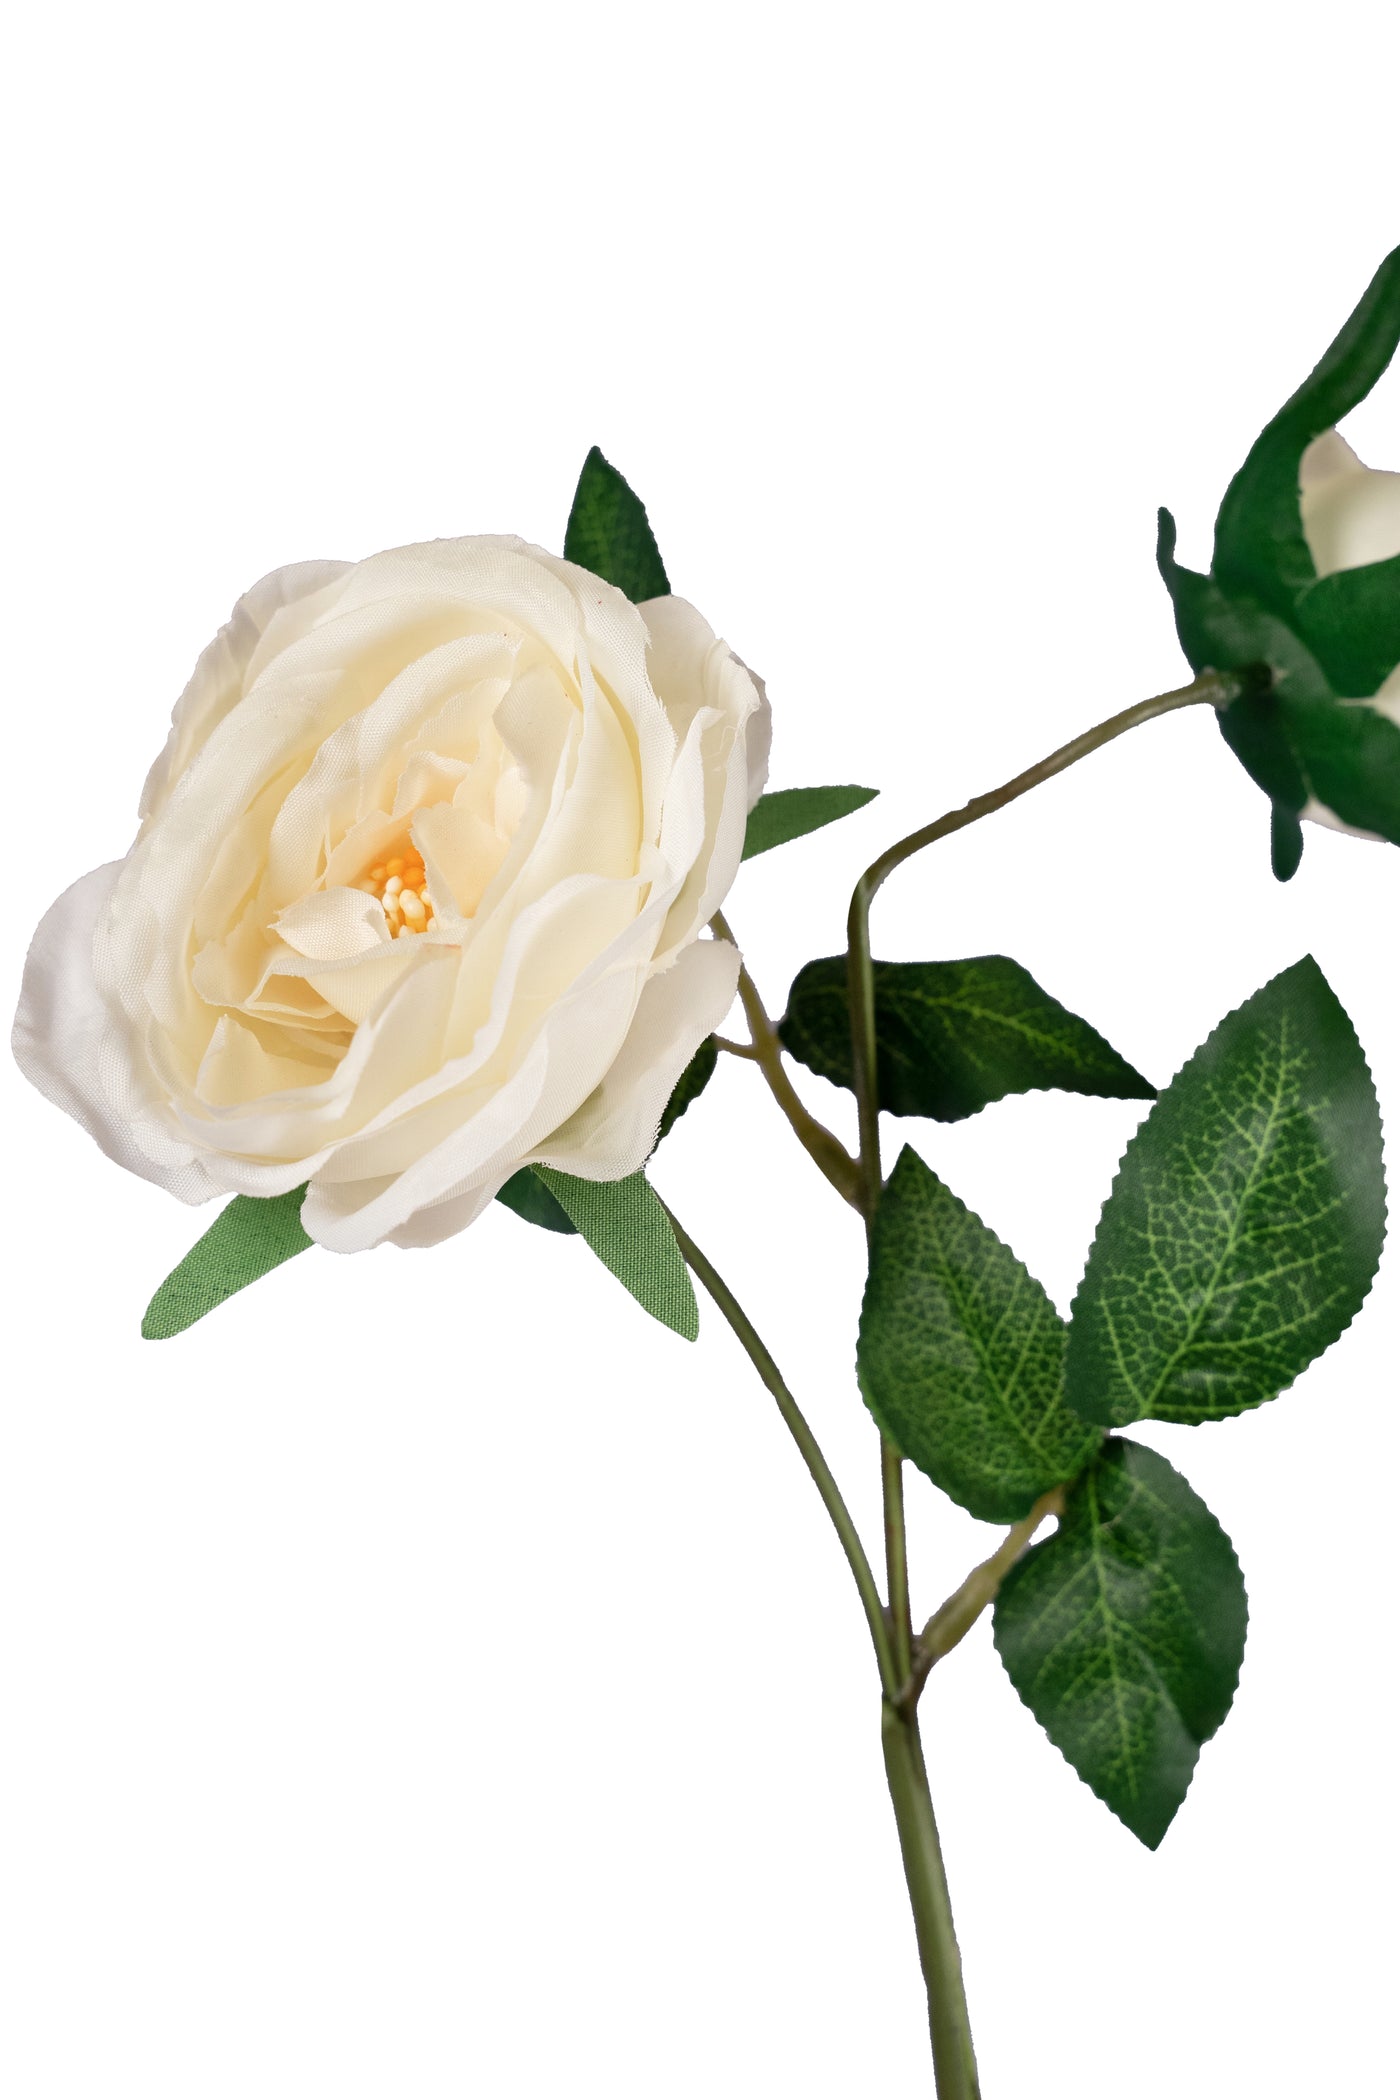 Trandafir tros H75 cm cu 7 flori. alb